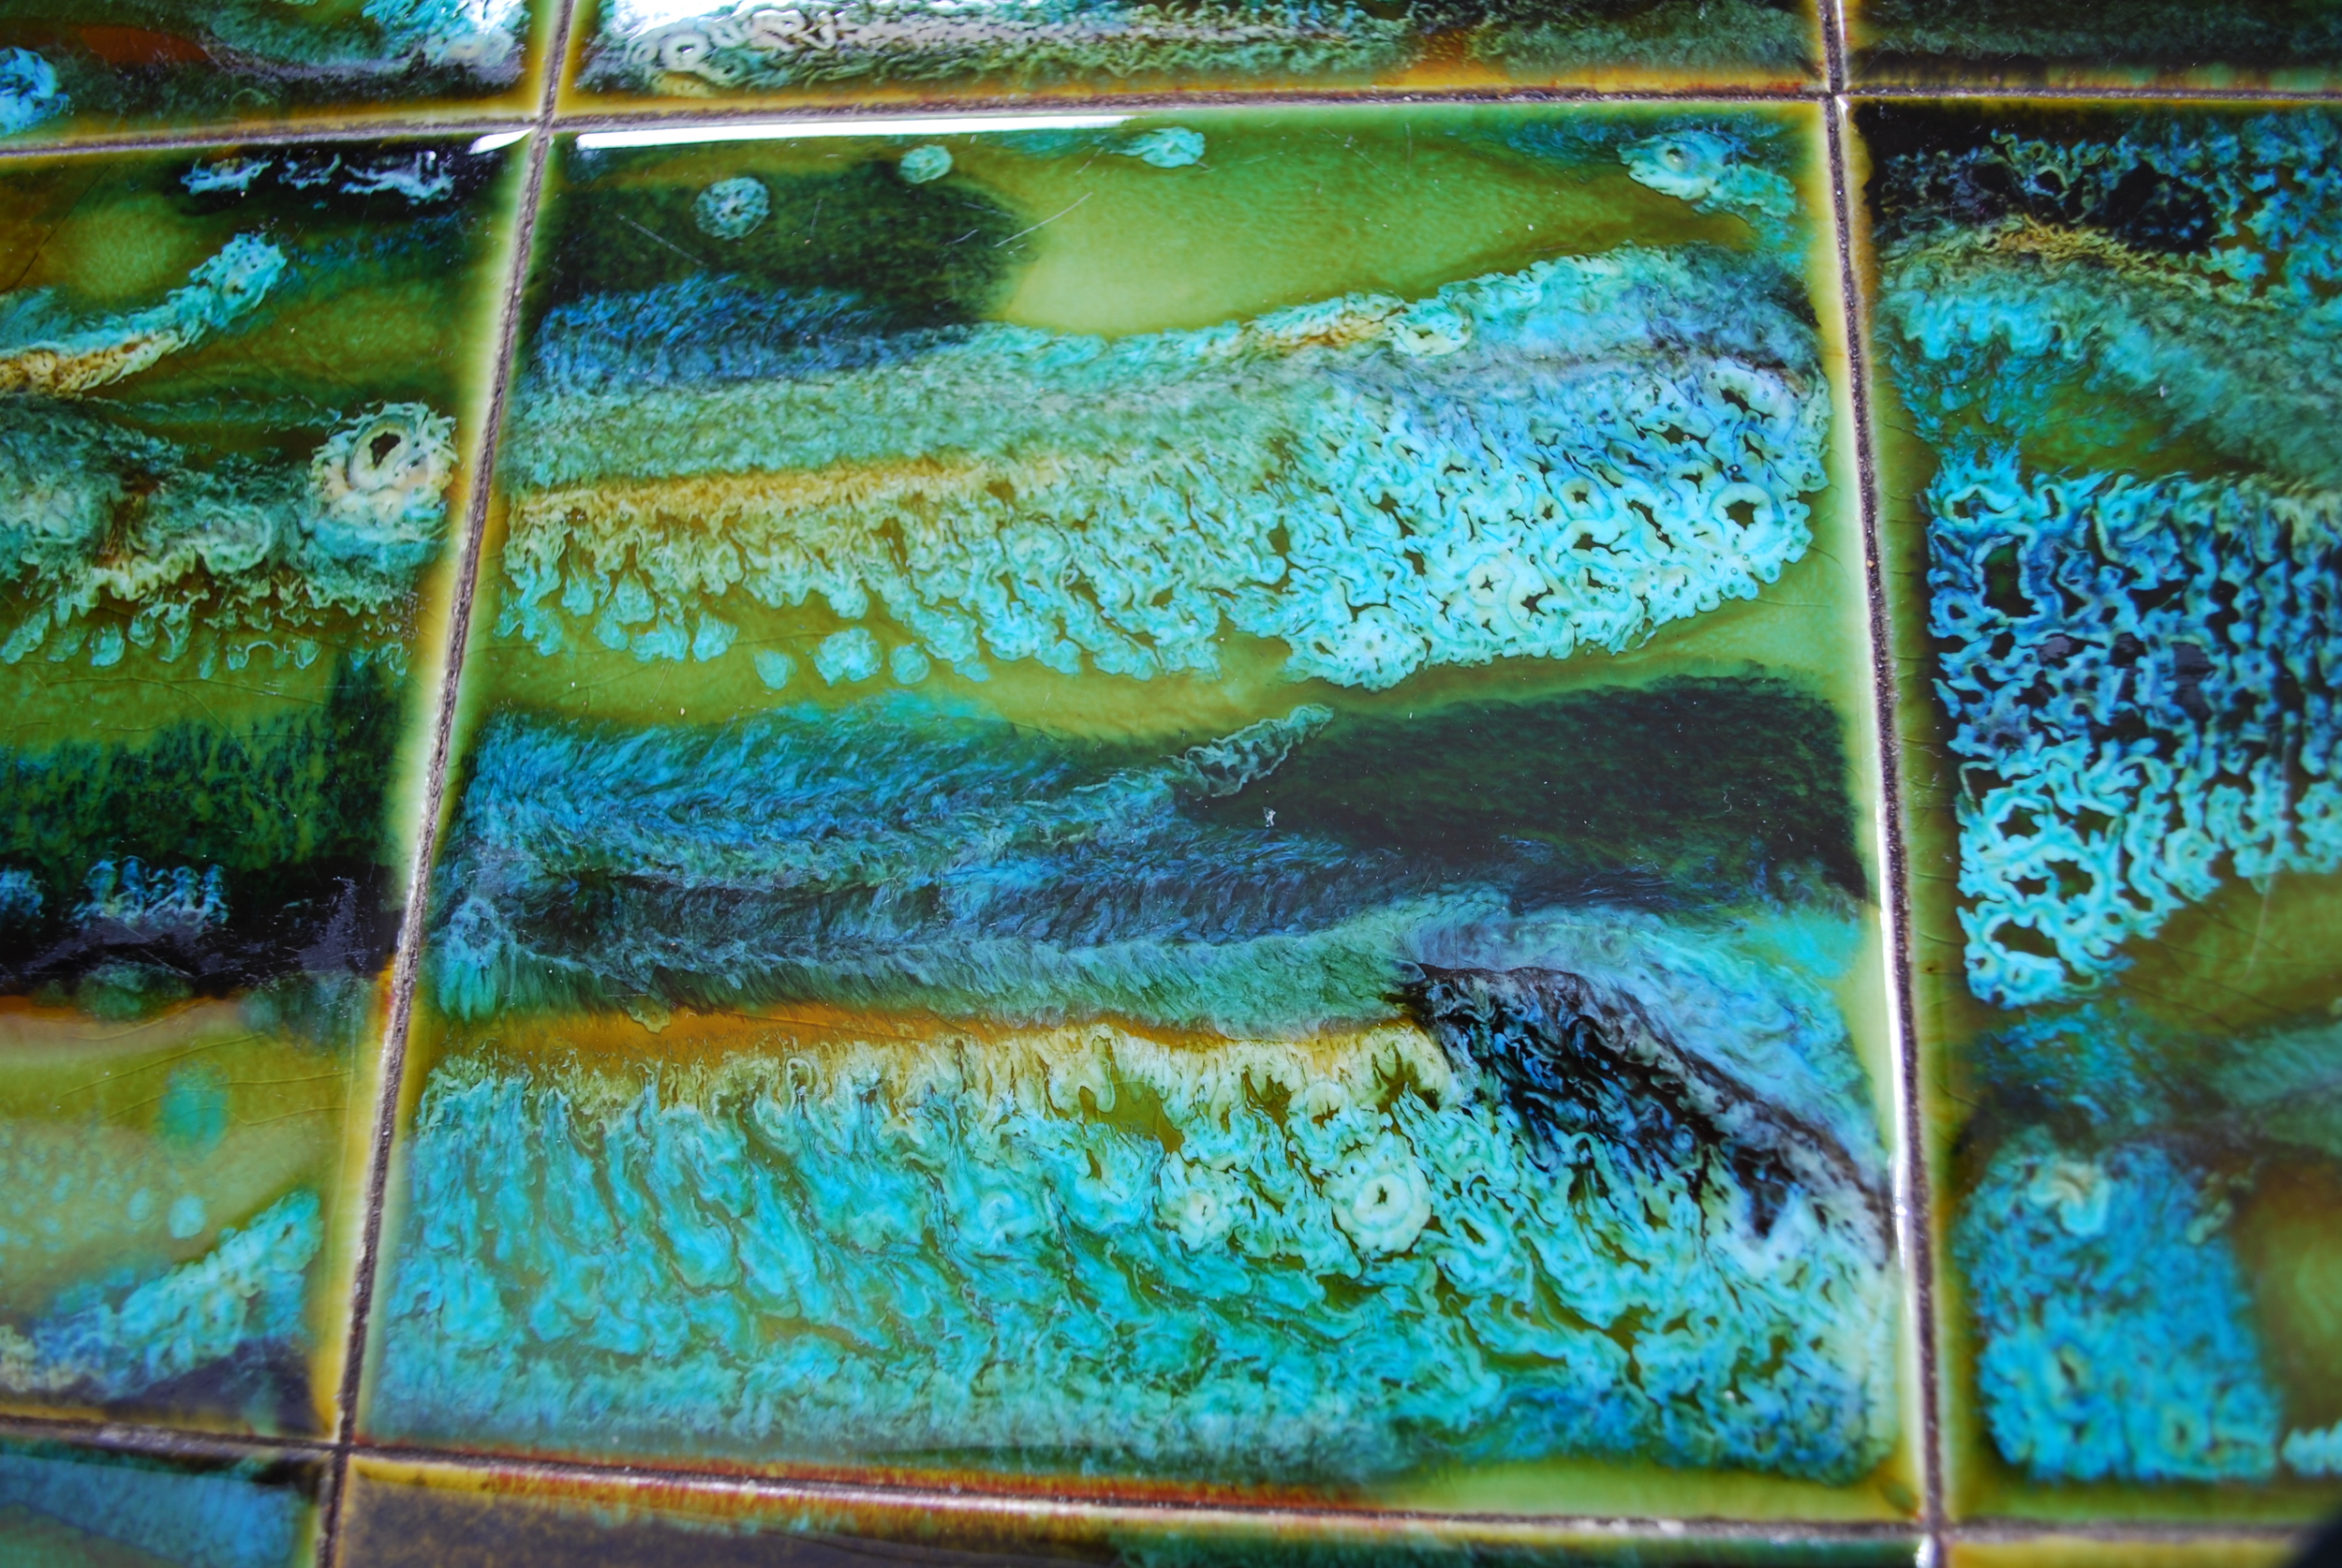 Tile table turquoise details Belgium 60's